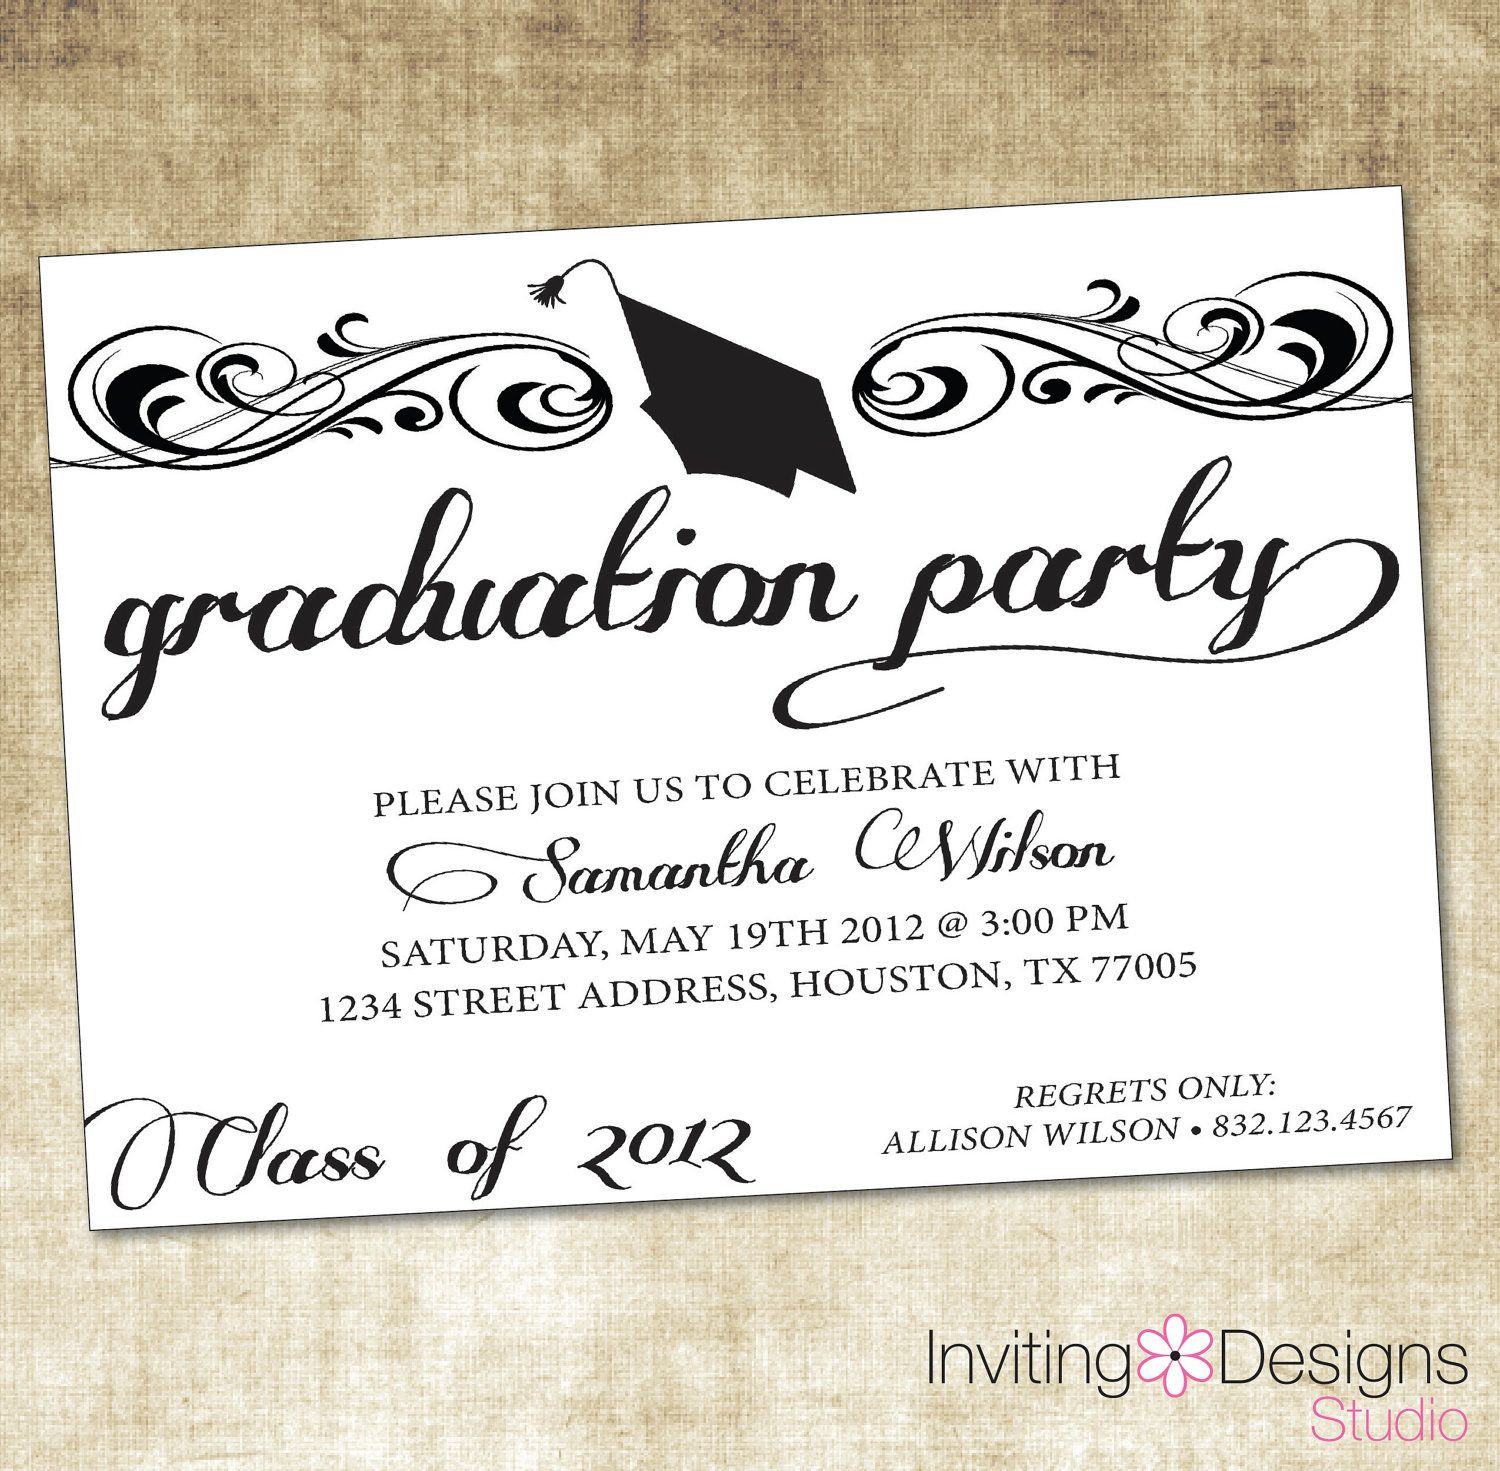 Graduation Party Invitation Wording Ideas
 Image result for graduation party invitation wording ideas